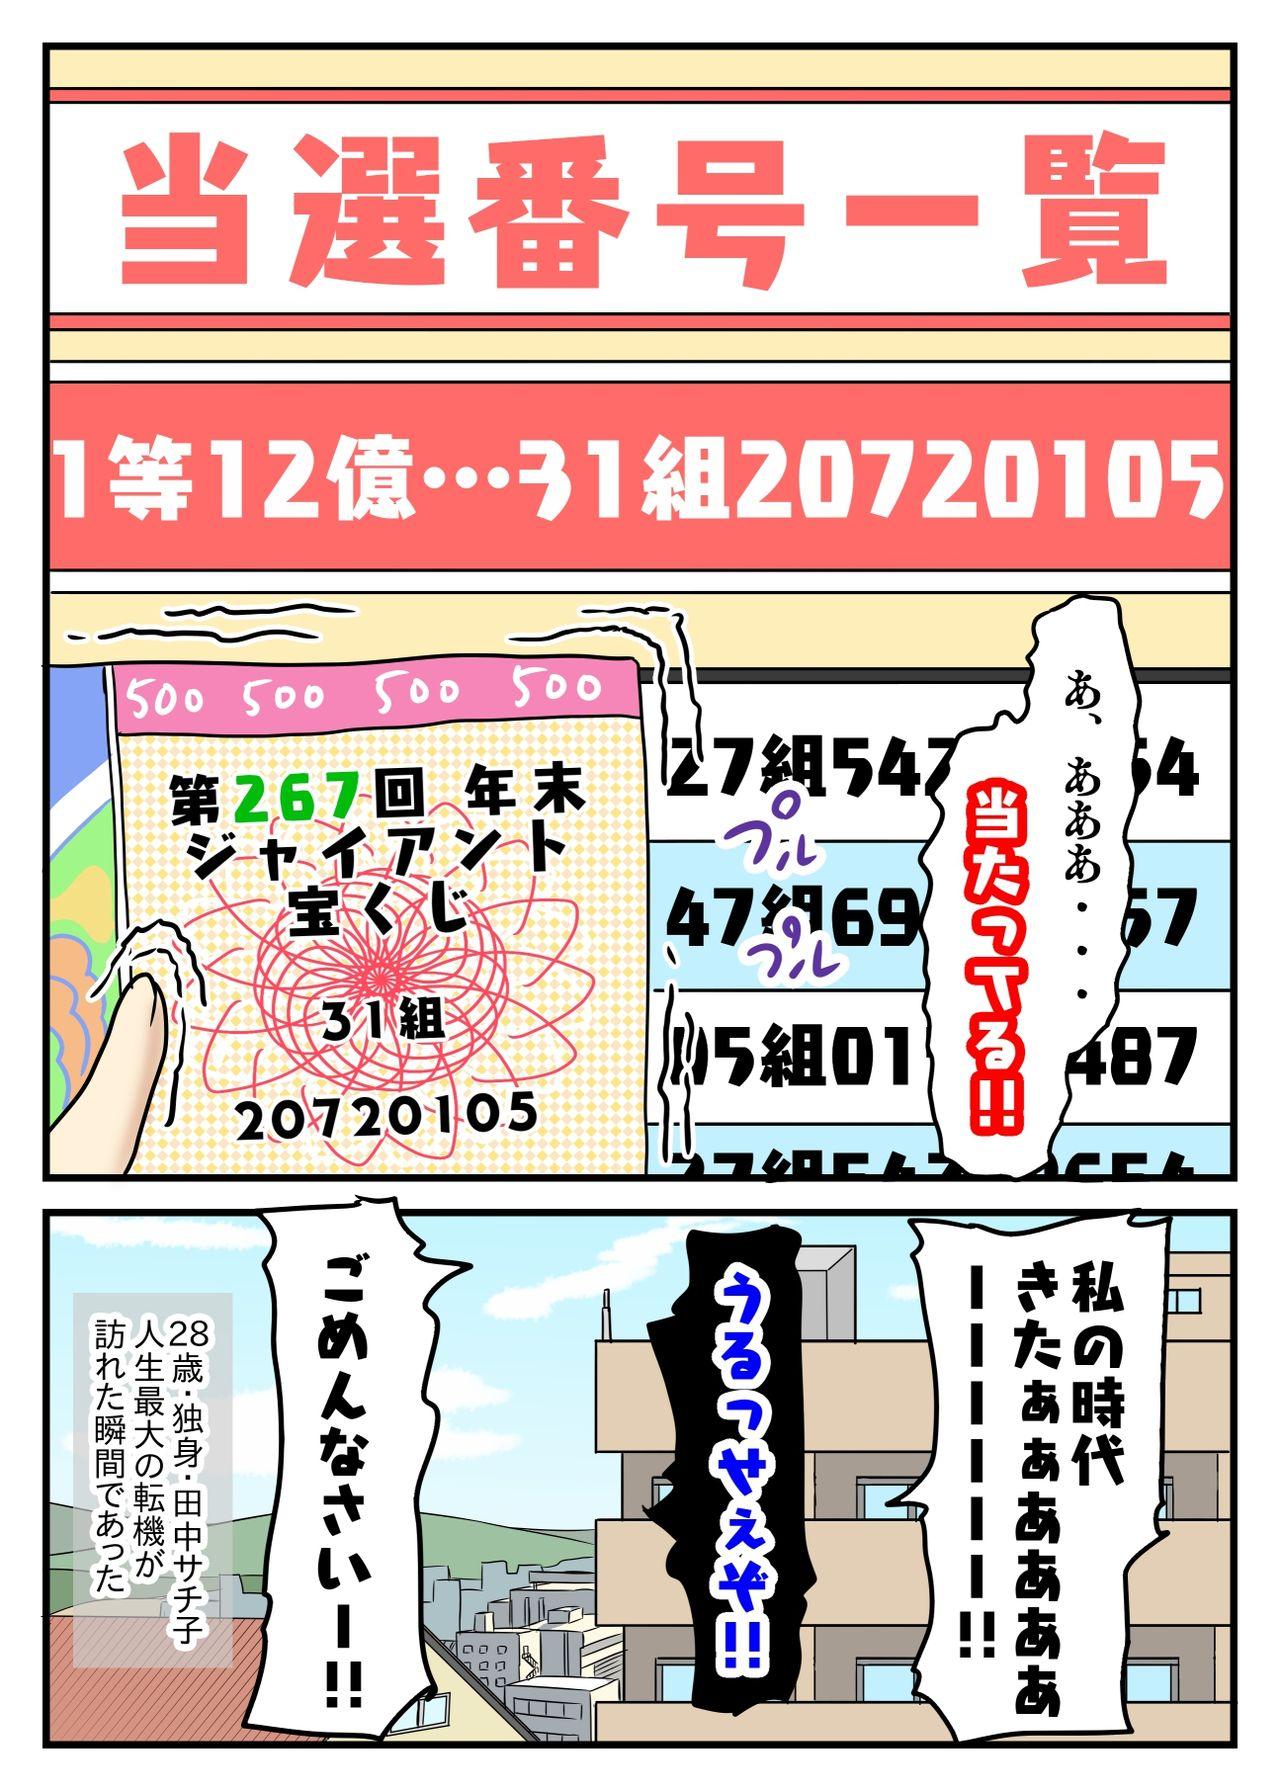 Amiga I Won the Lottery Big Time, So I Splurged at the Luxury Otoko no Ko Brothel - Original Chudai - Page 3